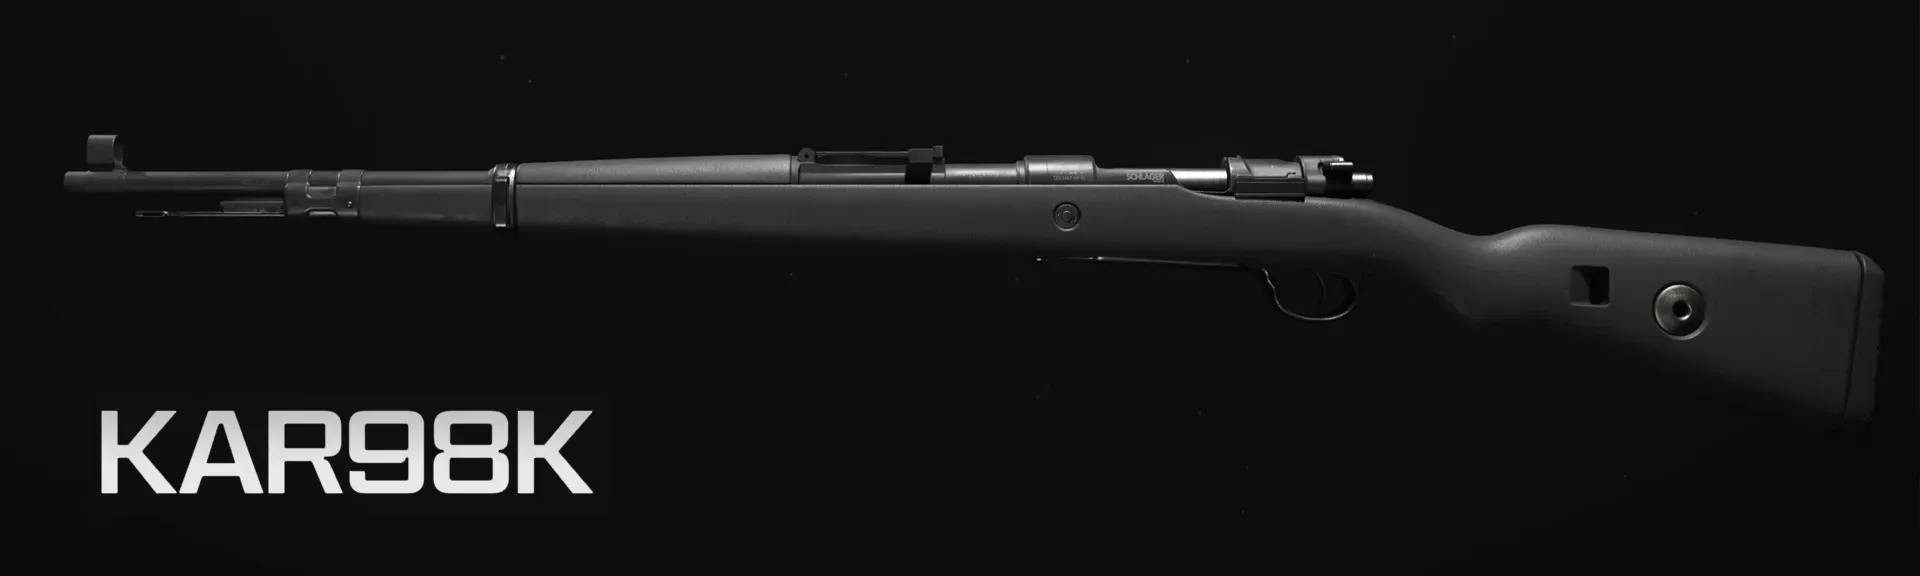 Kar98k Marksman Rifle